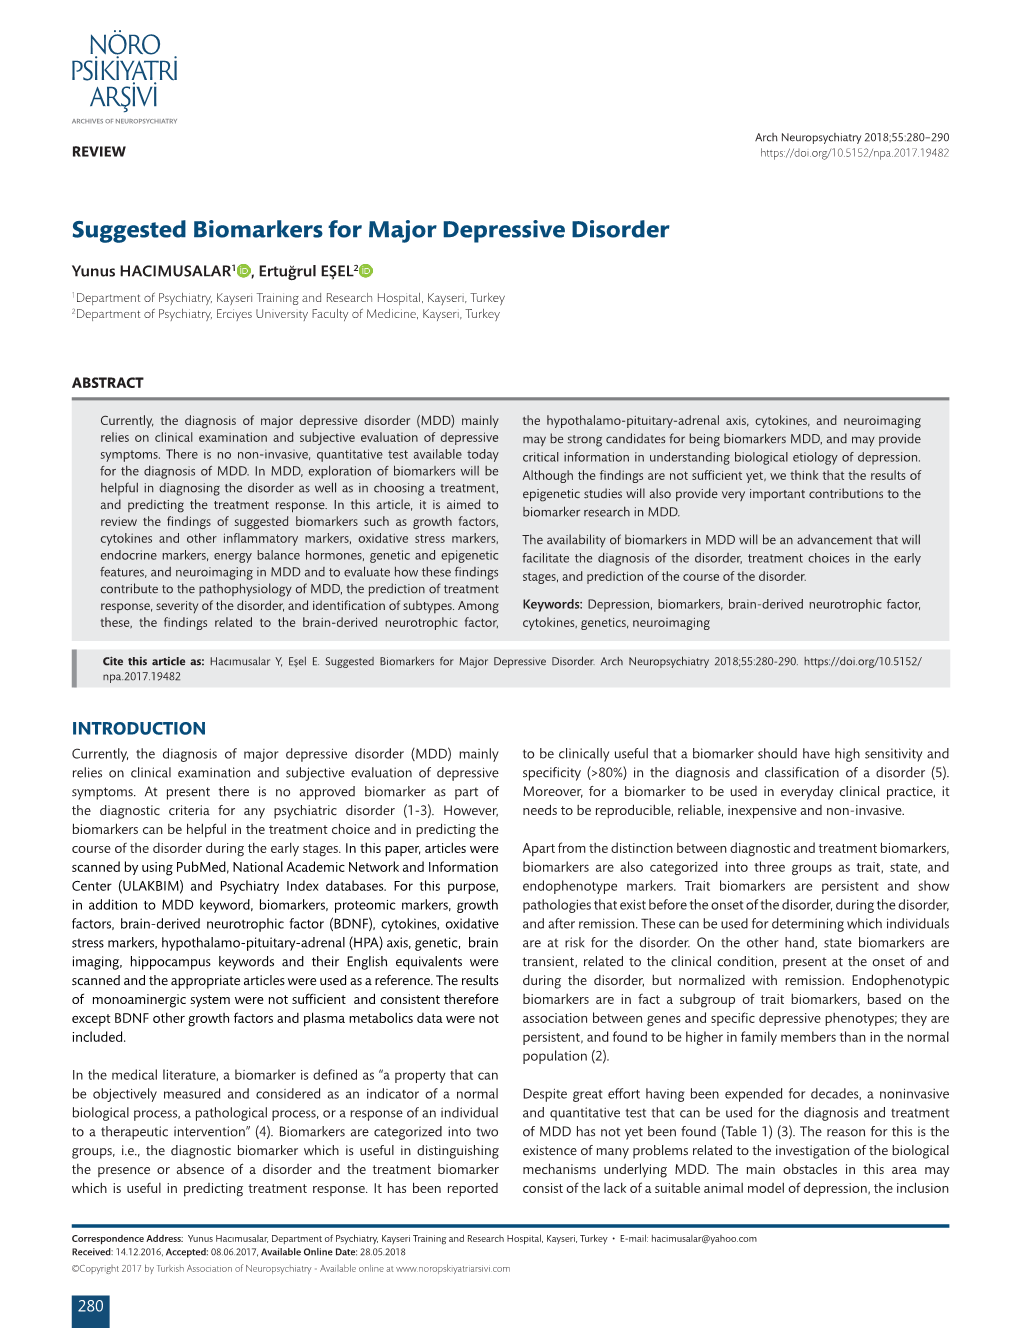 Suggested Biomarkers for Major Depressive Disorder